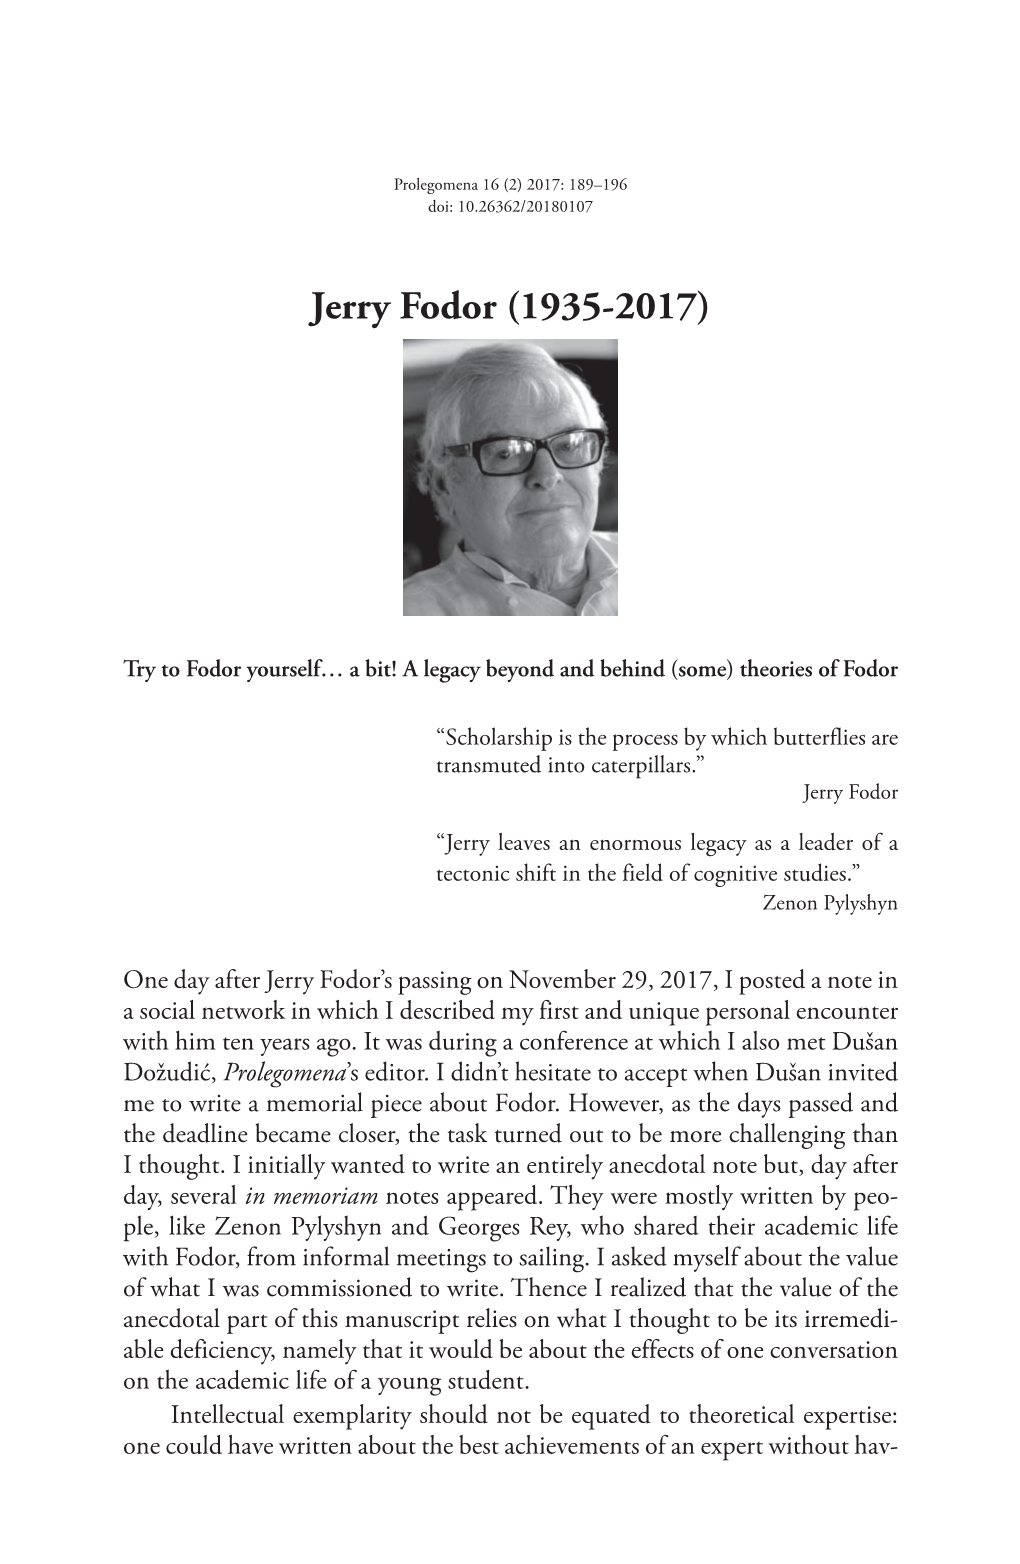 Jerry Fodor (1935-2017)